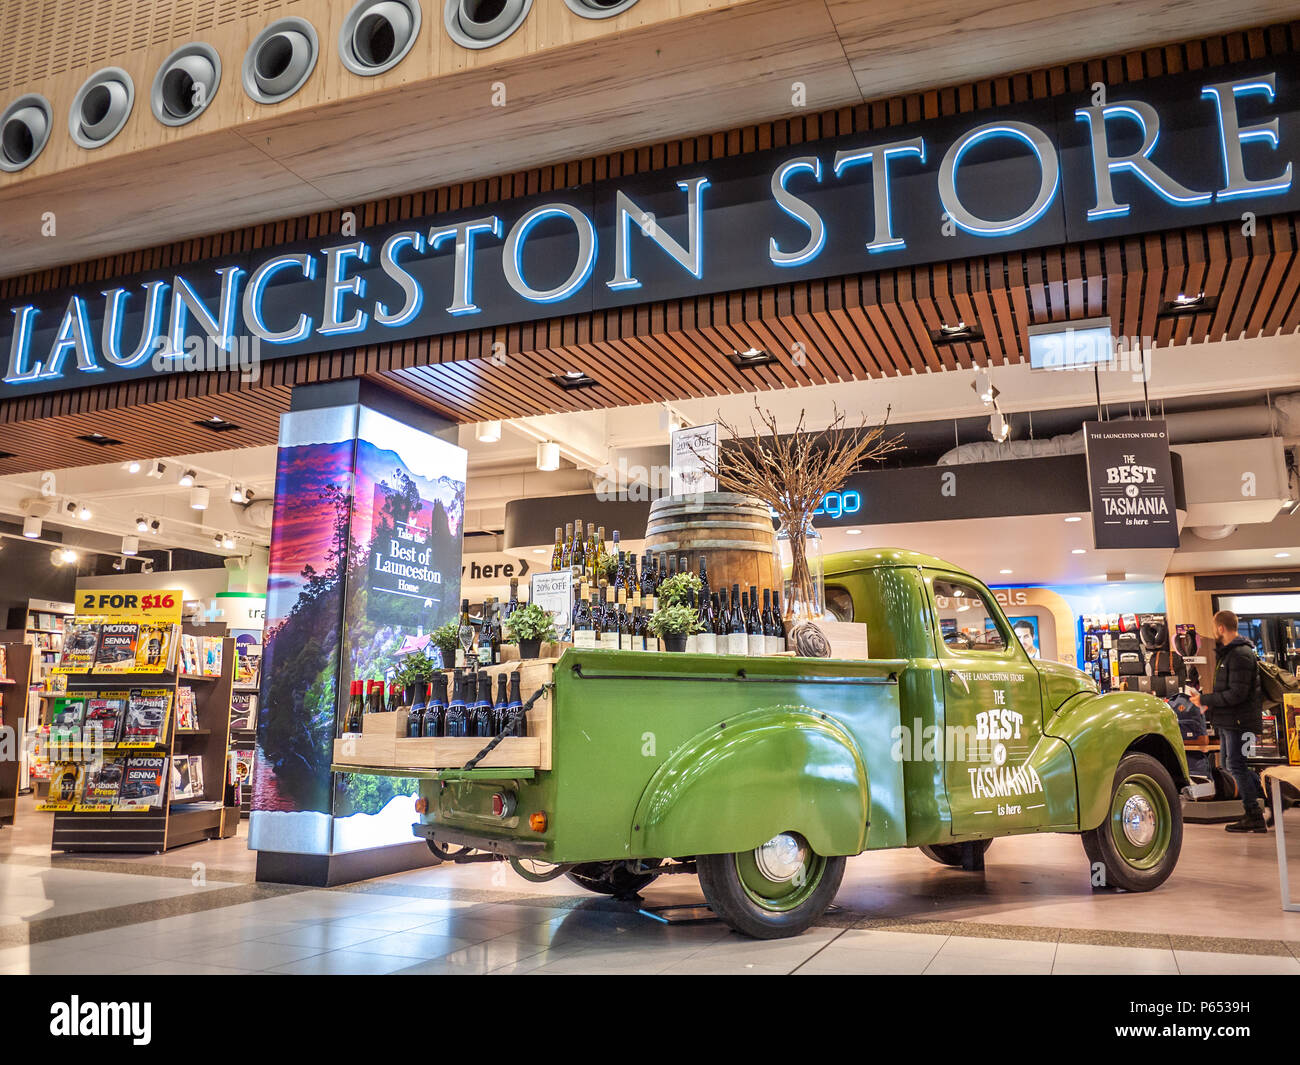 The Launceston Store in the Launceston airport, offering travel essentials and local produce gifts & souvenirs. Launceston, Tasmania, Australia Stock Photo